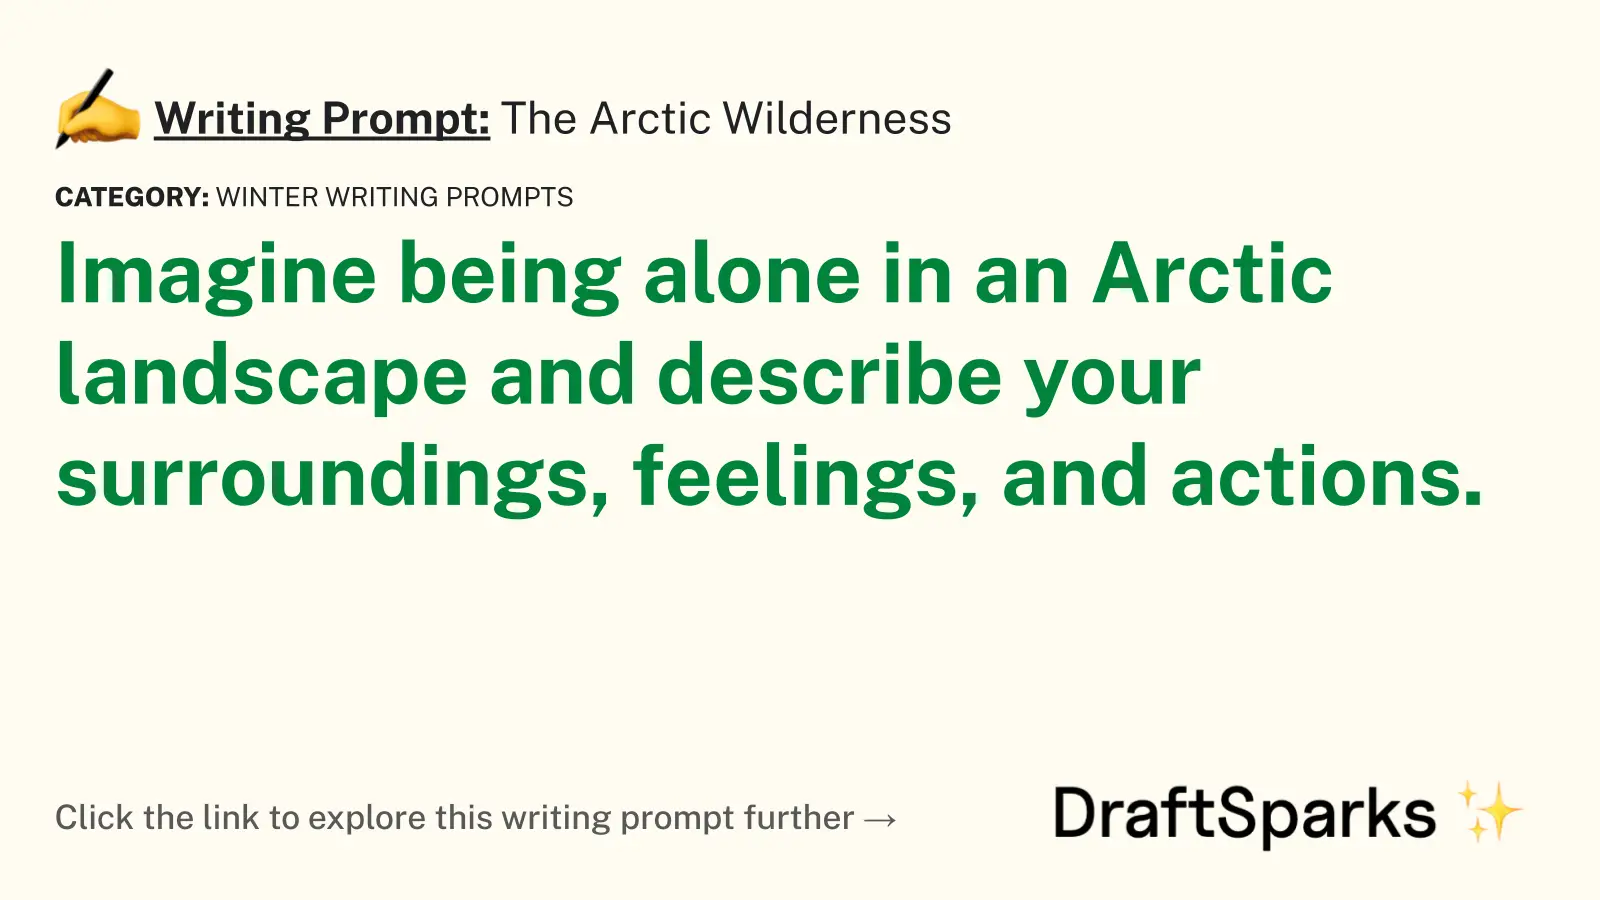 The Arctic Wilderness